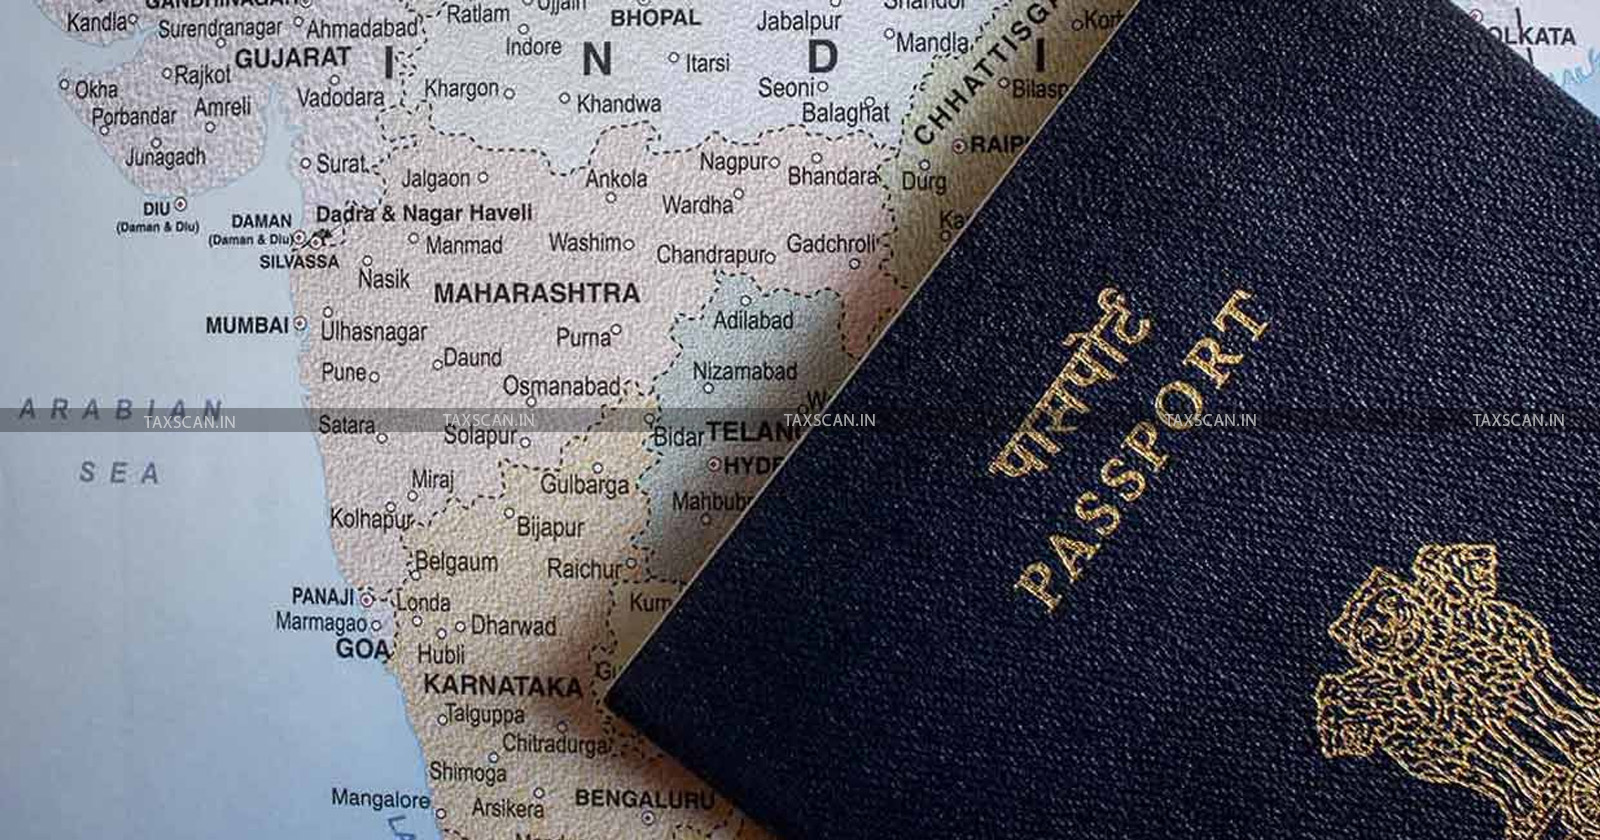 Delhi High Court - NDPS - NDPS crime - Custom department - Passport surrender case update - TAXSCAN